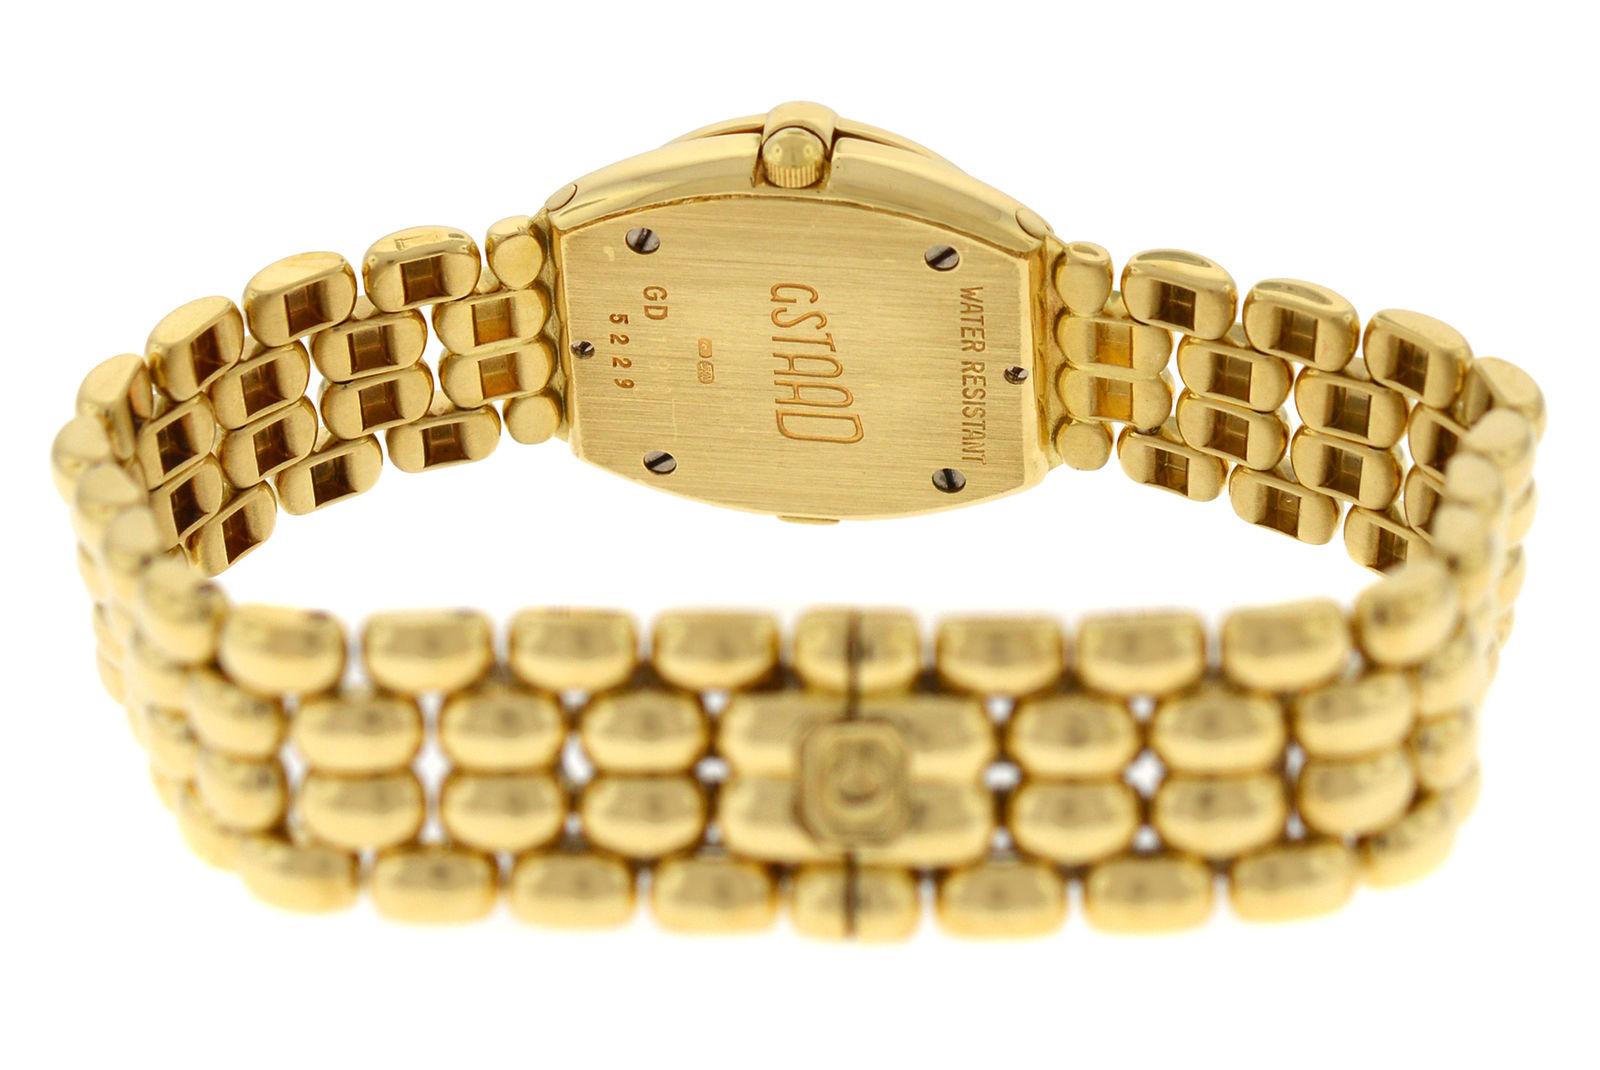 Authentic Ladies Chopard Gstaad Quartz 18 Karat Yellow Gold Watch For Sale 1